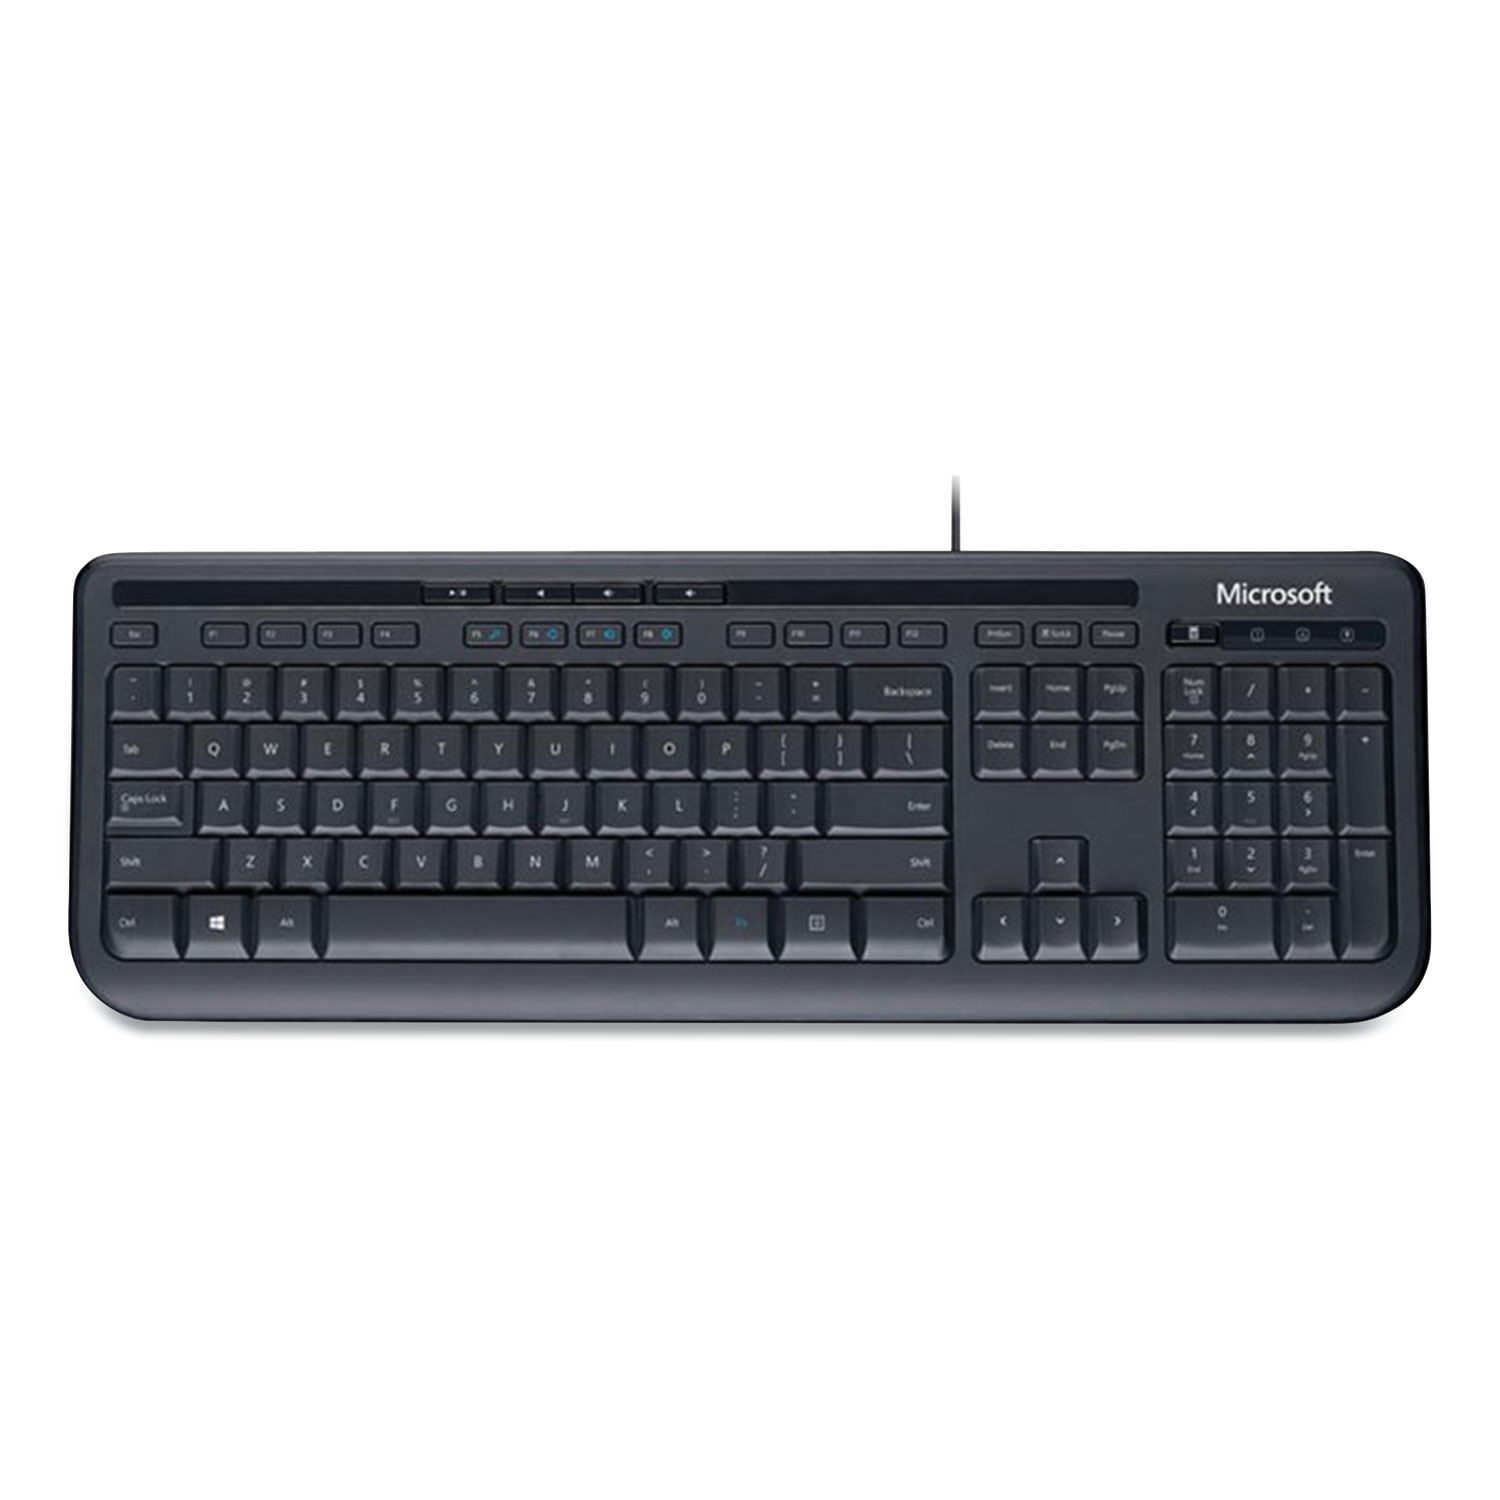  Microsoft ANB-00001 600 Wired Gaming Keyboard, 104 Keys, Black (MSF785490) 